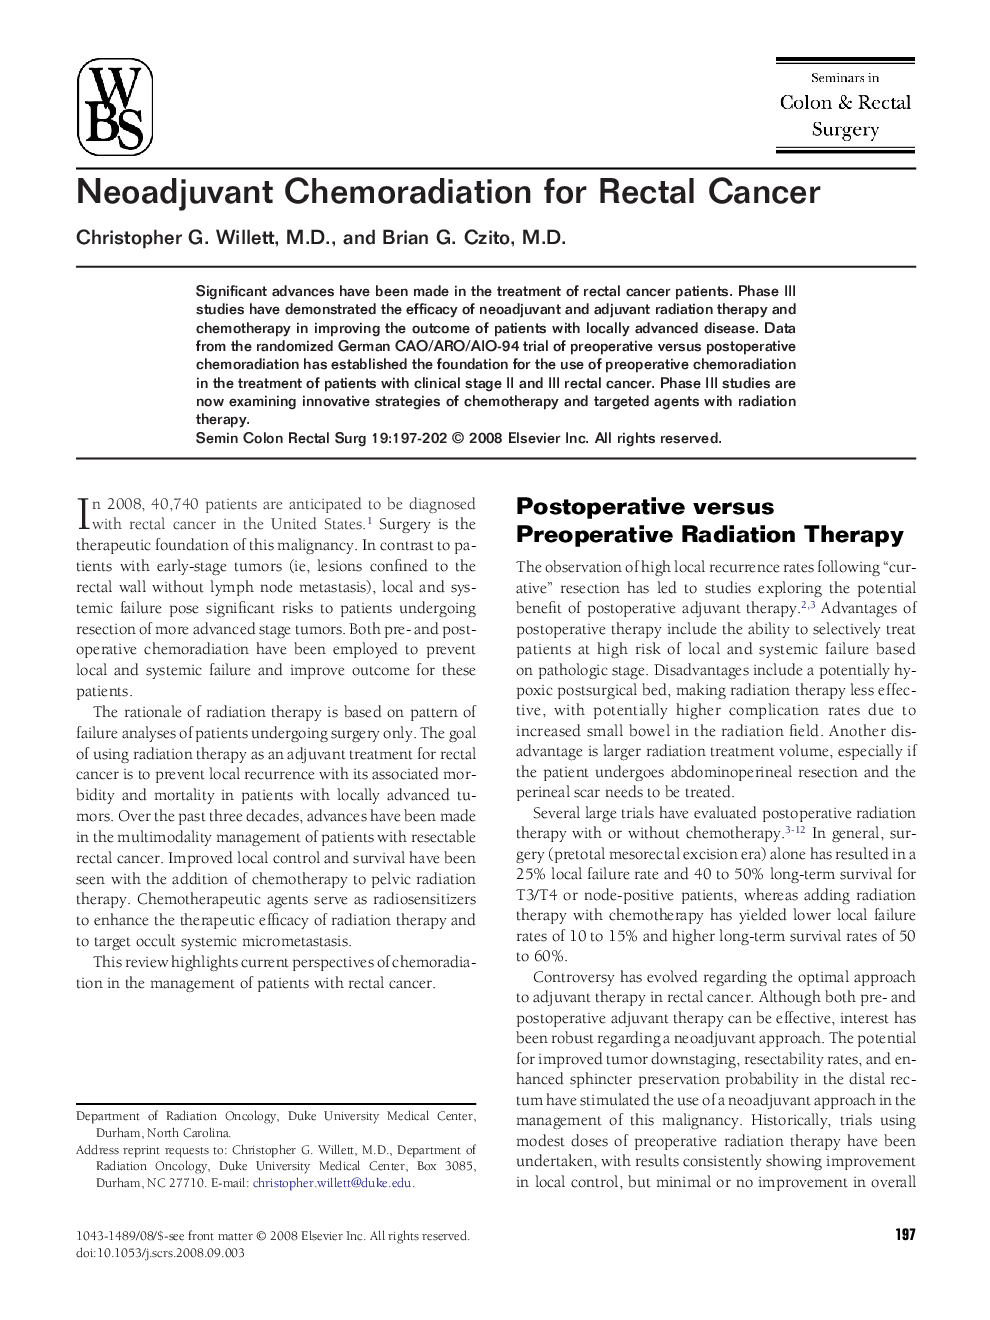 Neoadjuvant Chemoradiation for Rectal Cancer